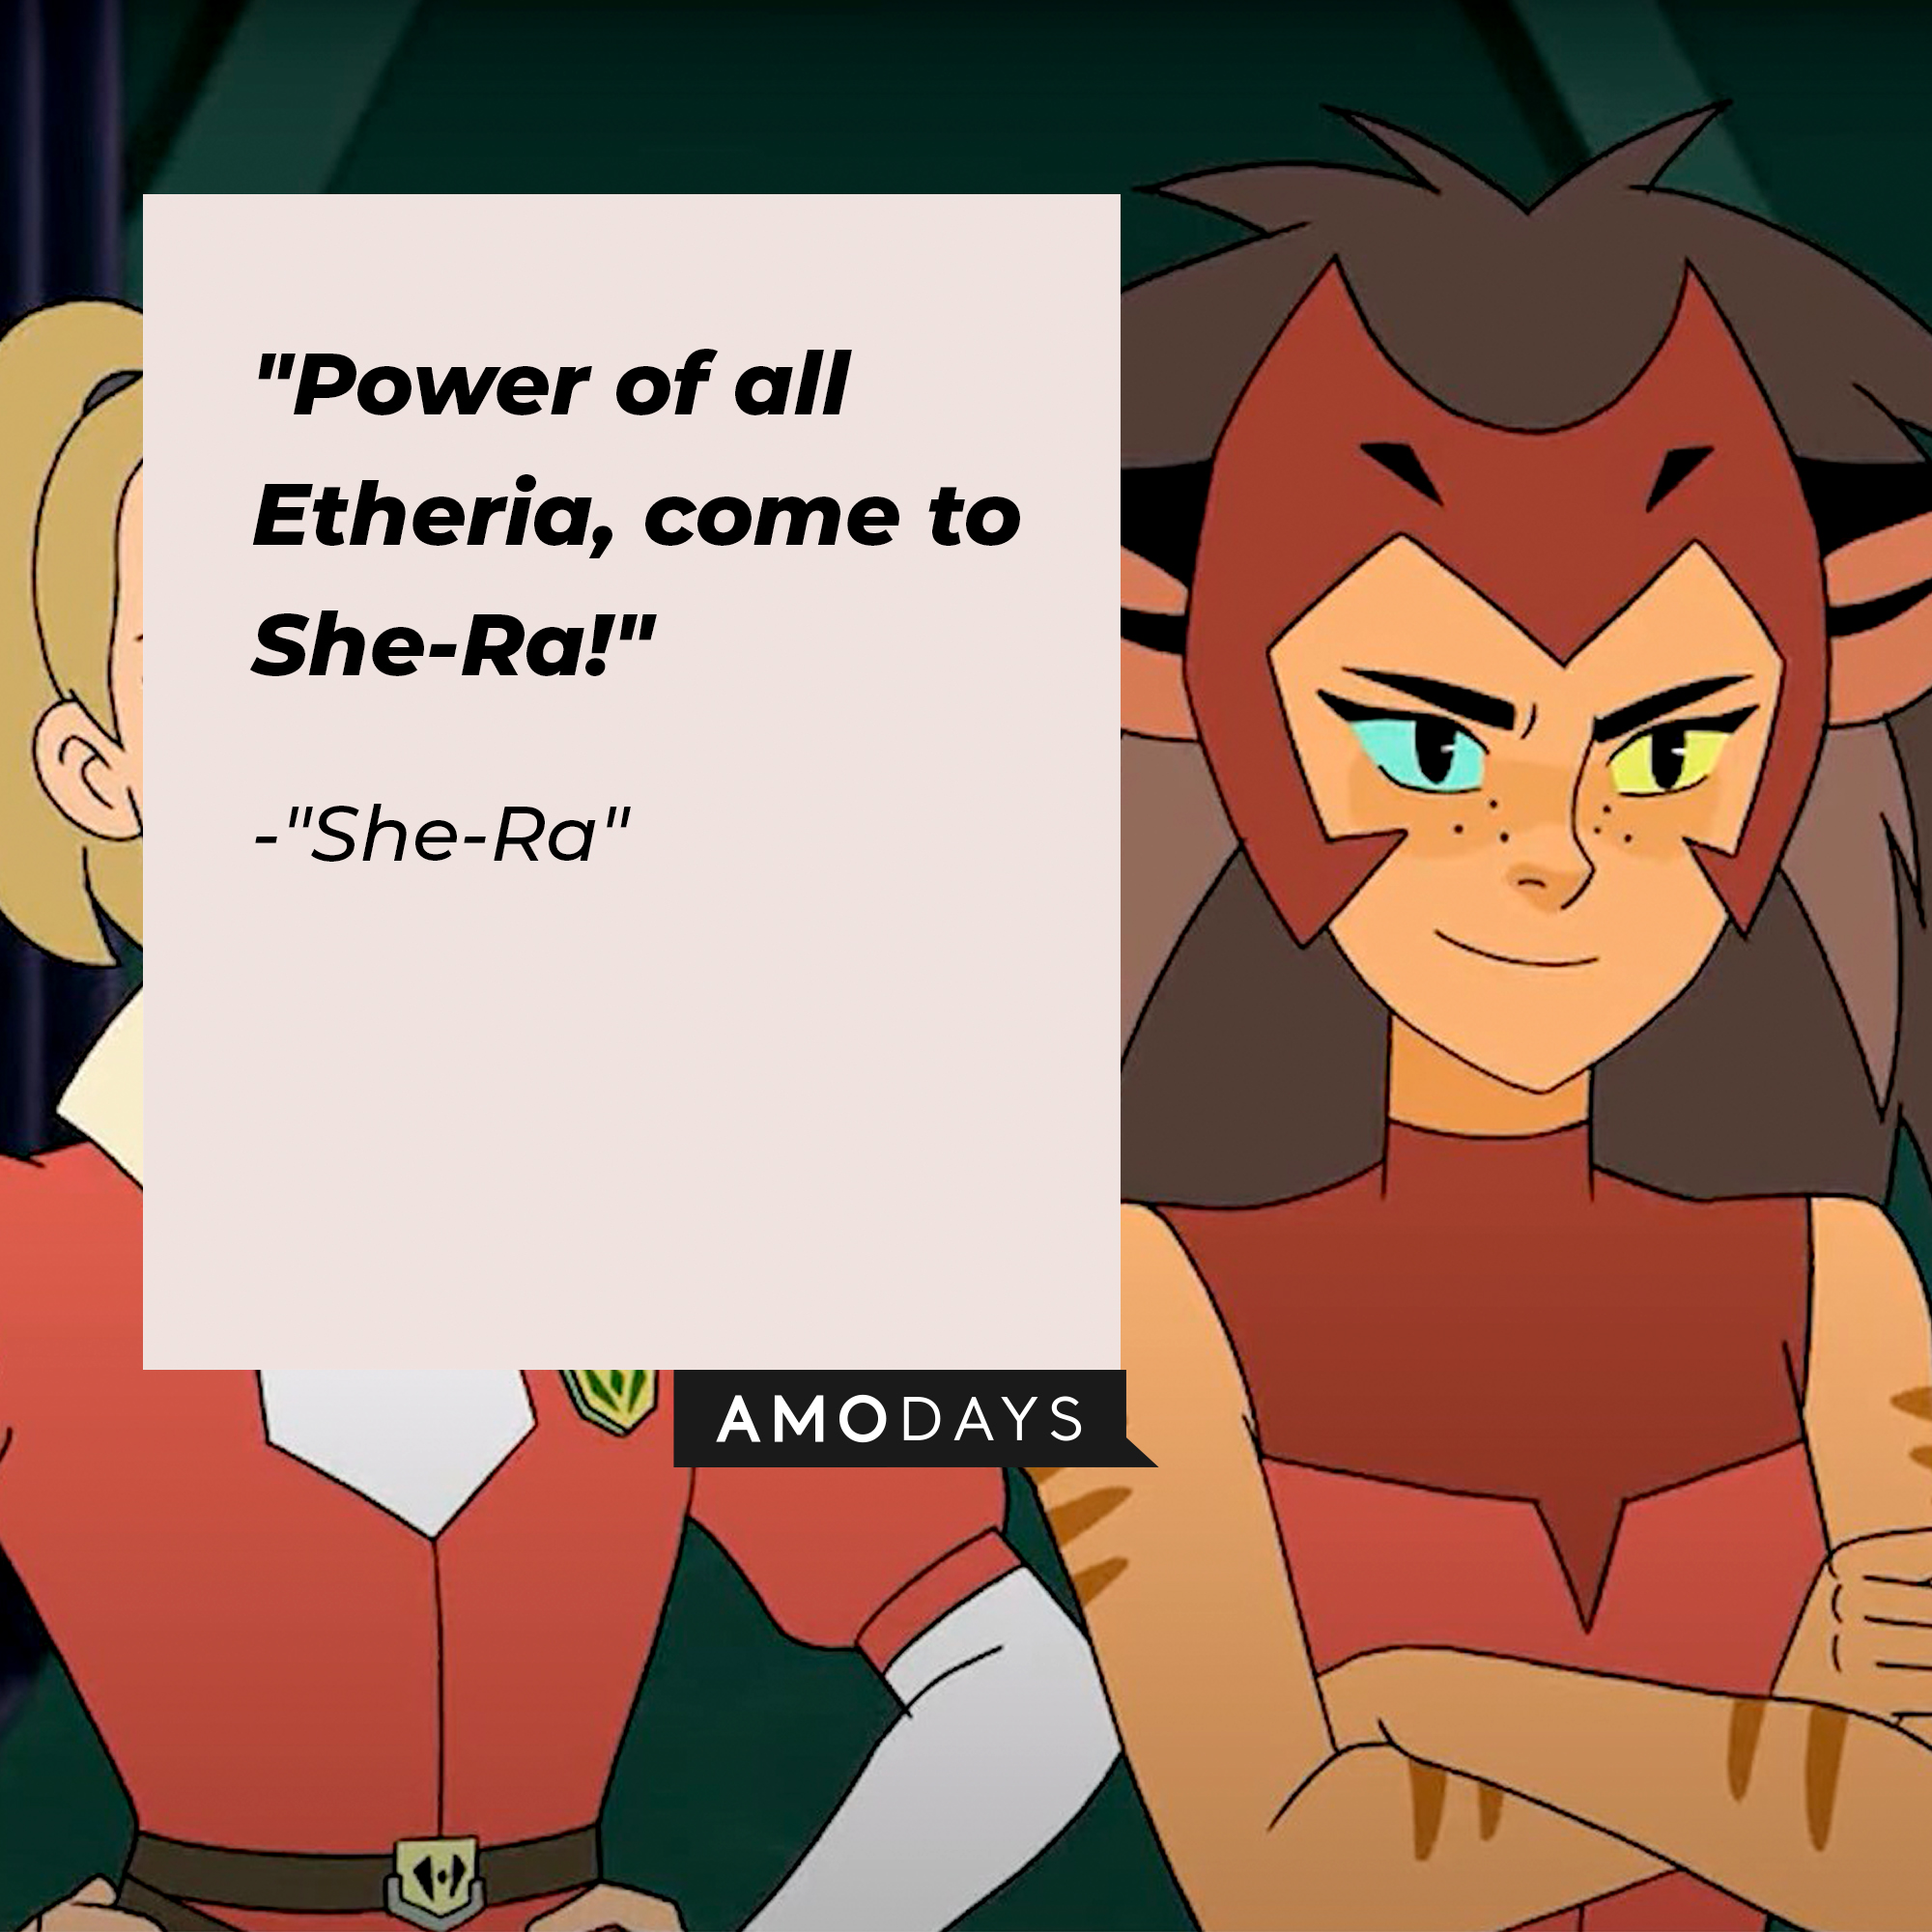 "She-Ra's" quote: "Power of all Etheria, come to She-Ra!" | Source: Facebook.com/DreamWorksSheRa